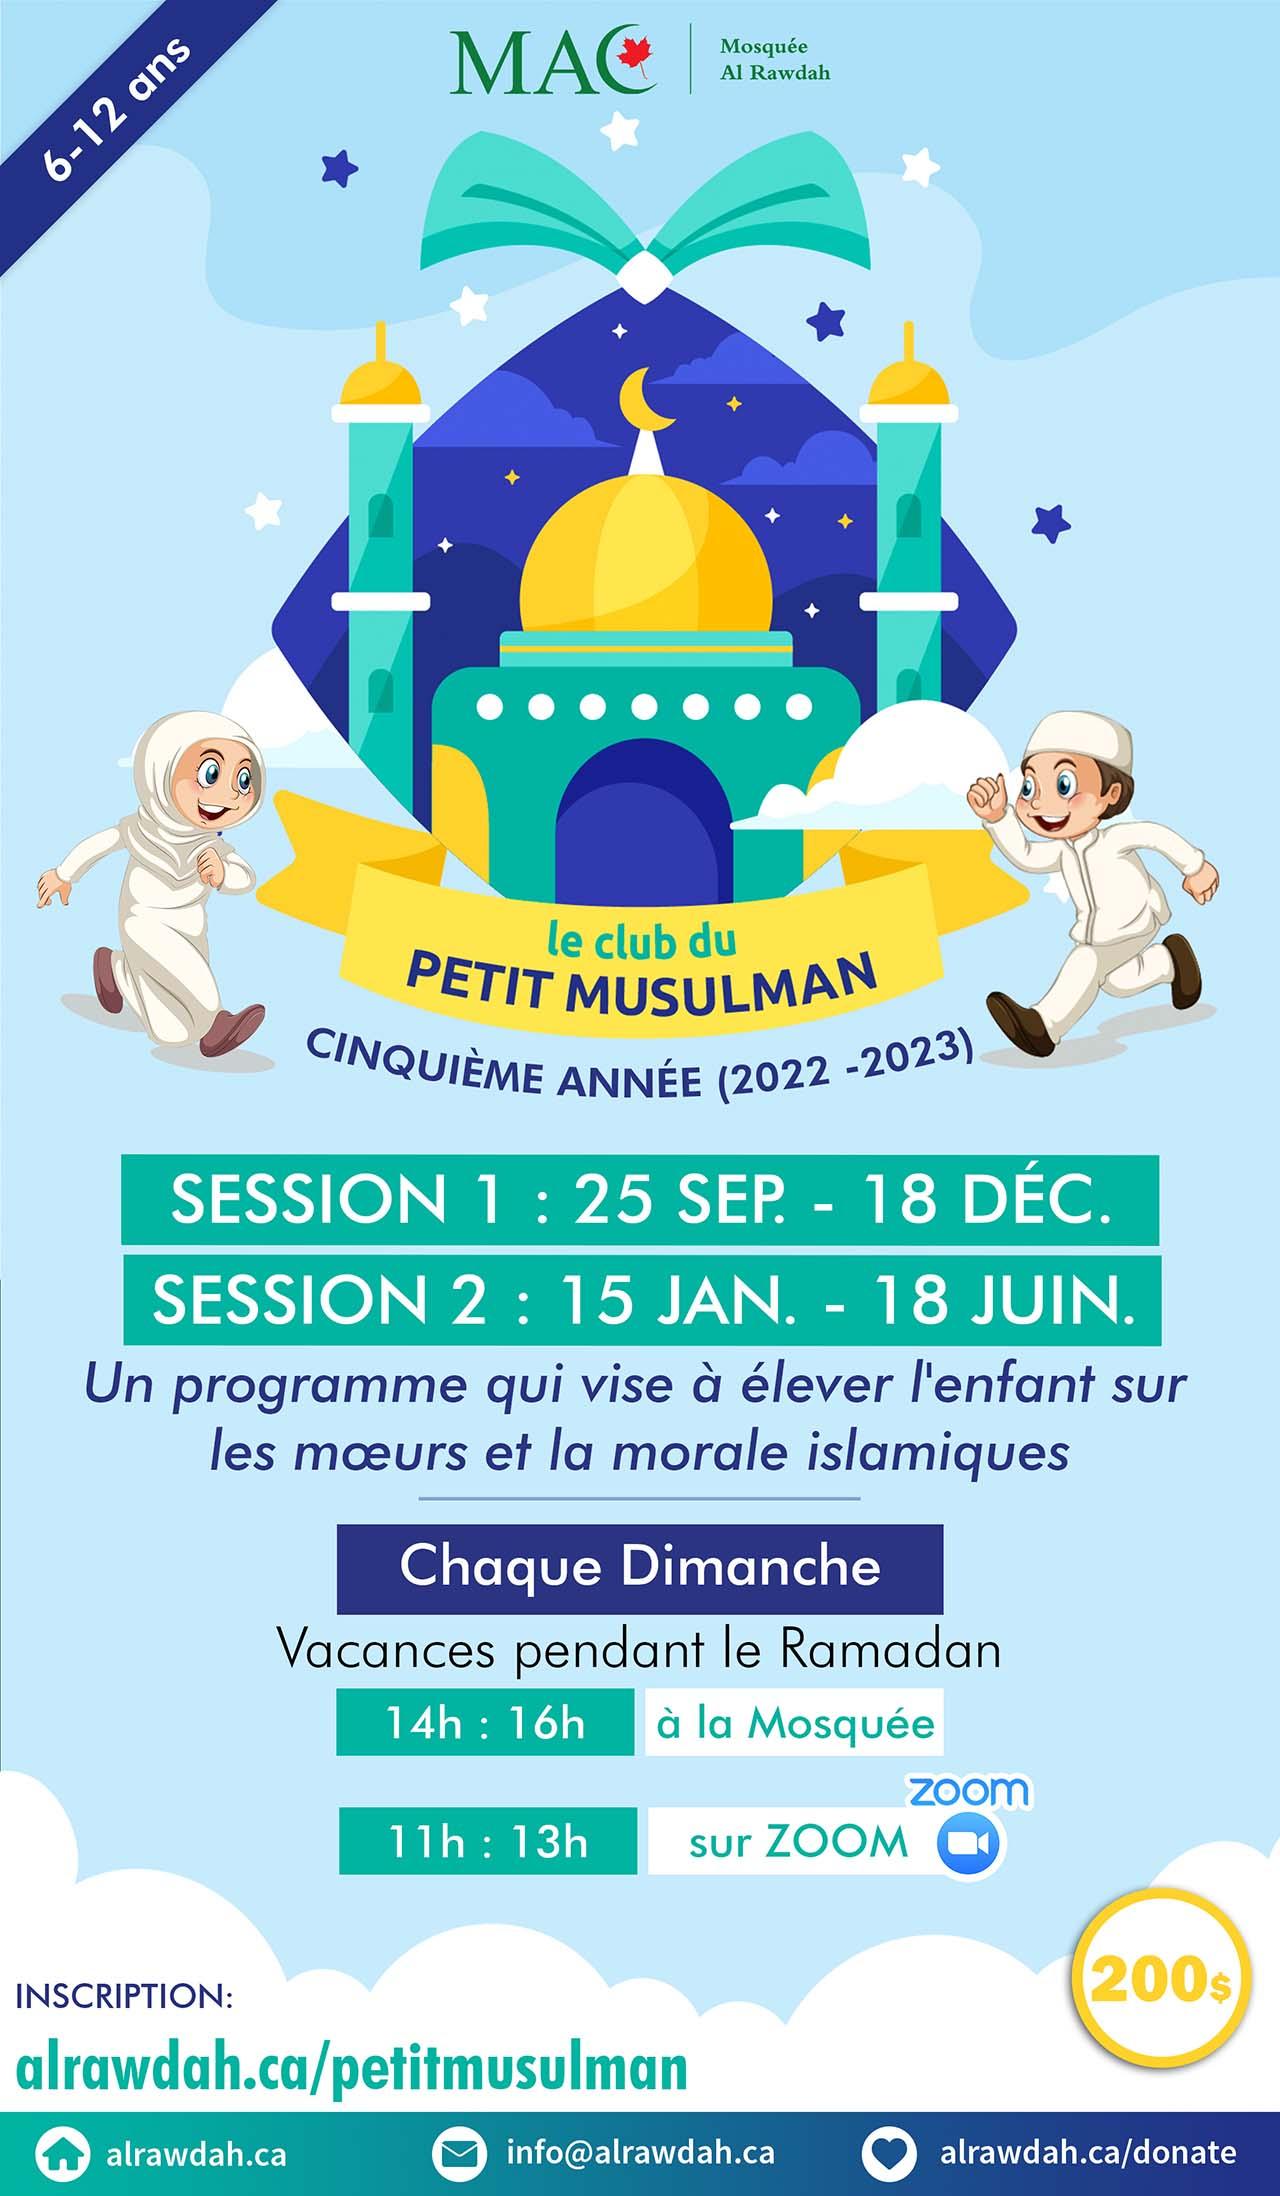 Le club du petit musulman نادي المسلم الصغير